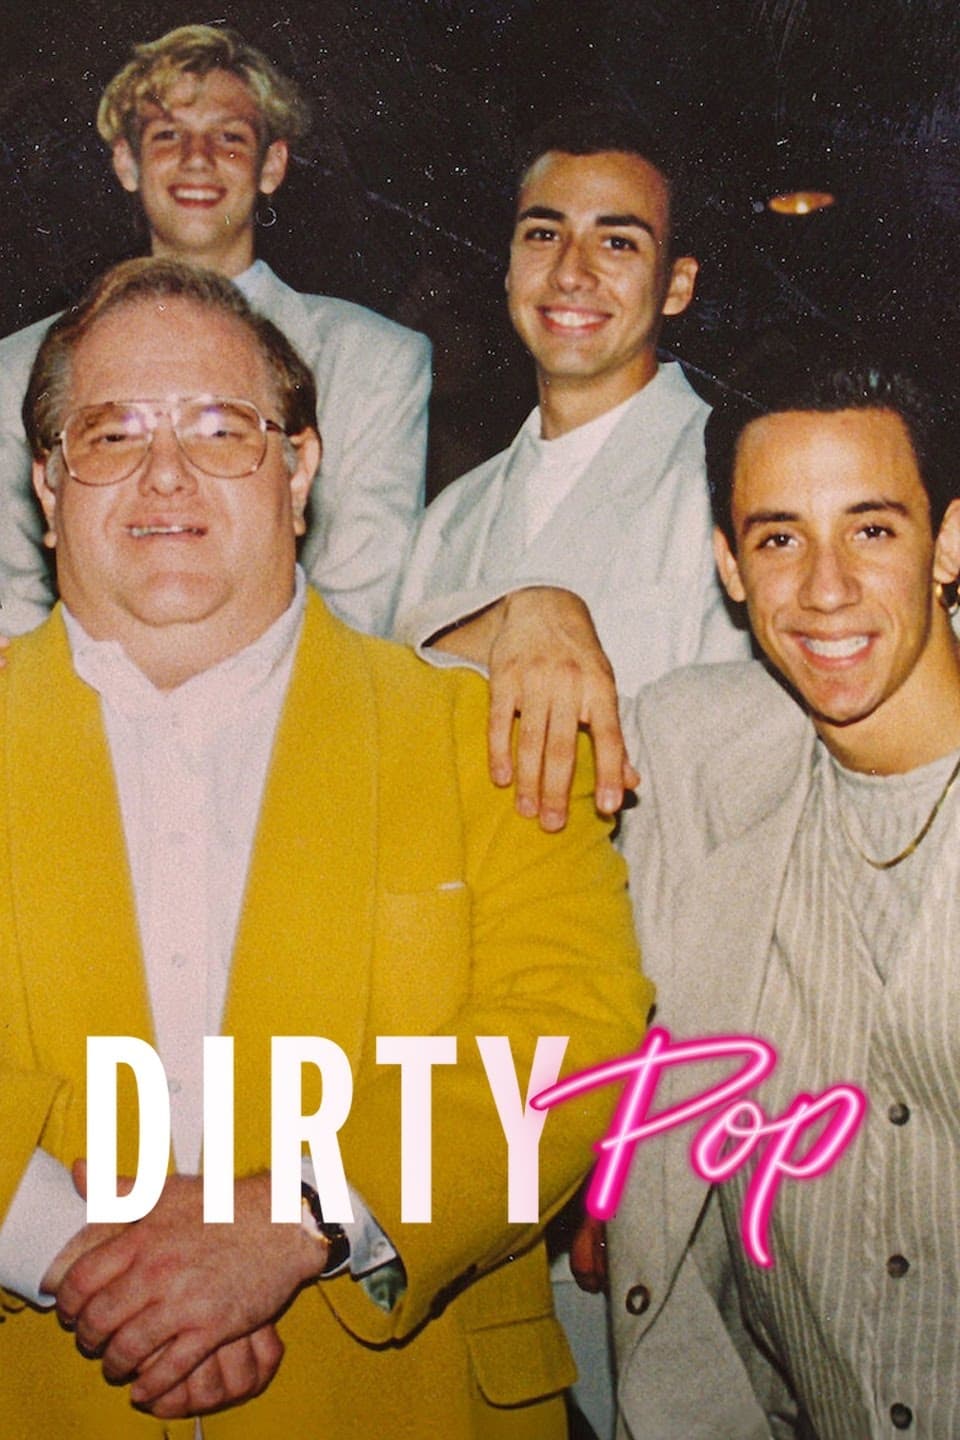 Dirty Pop : L'imprésario est un escroc